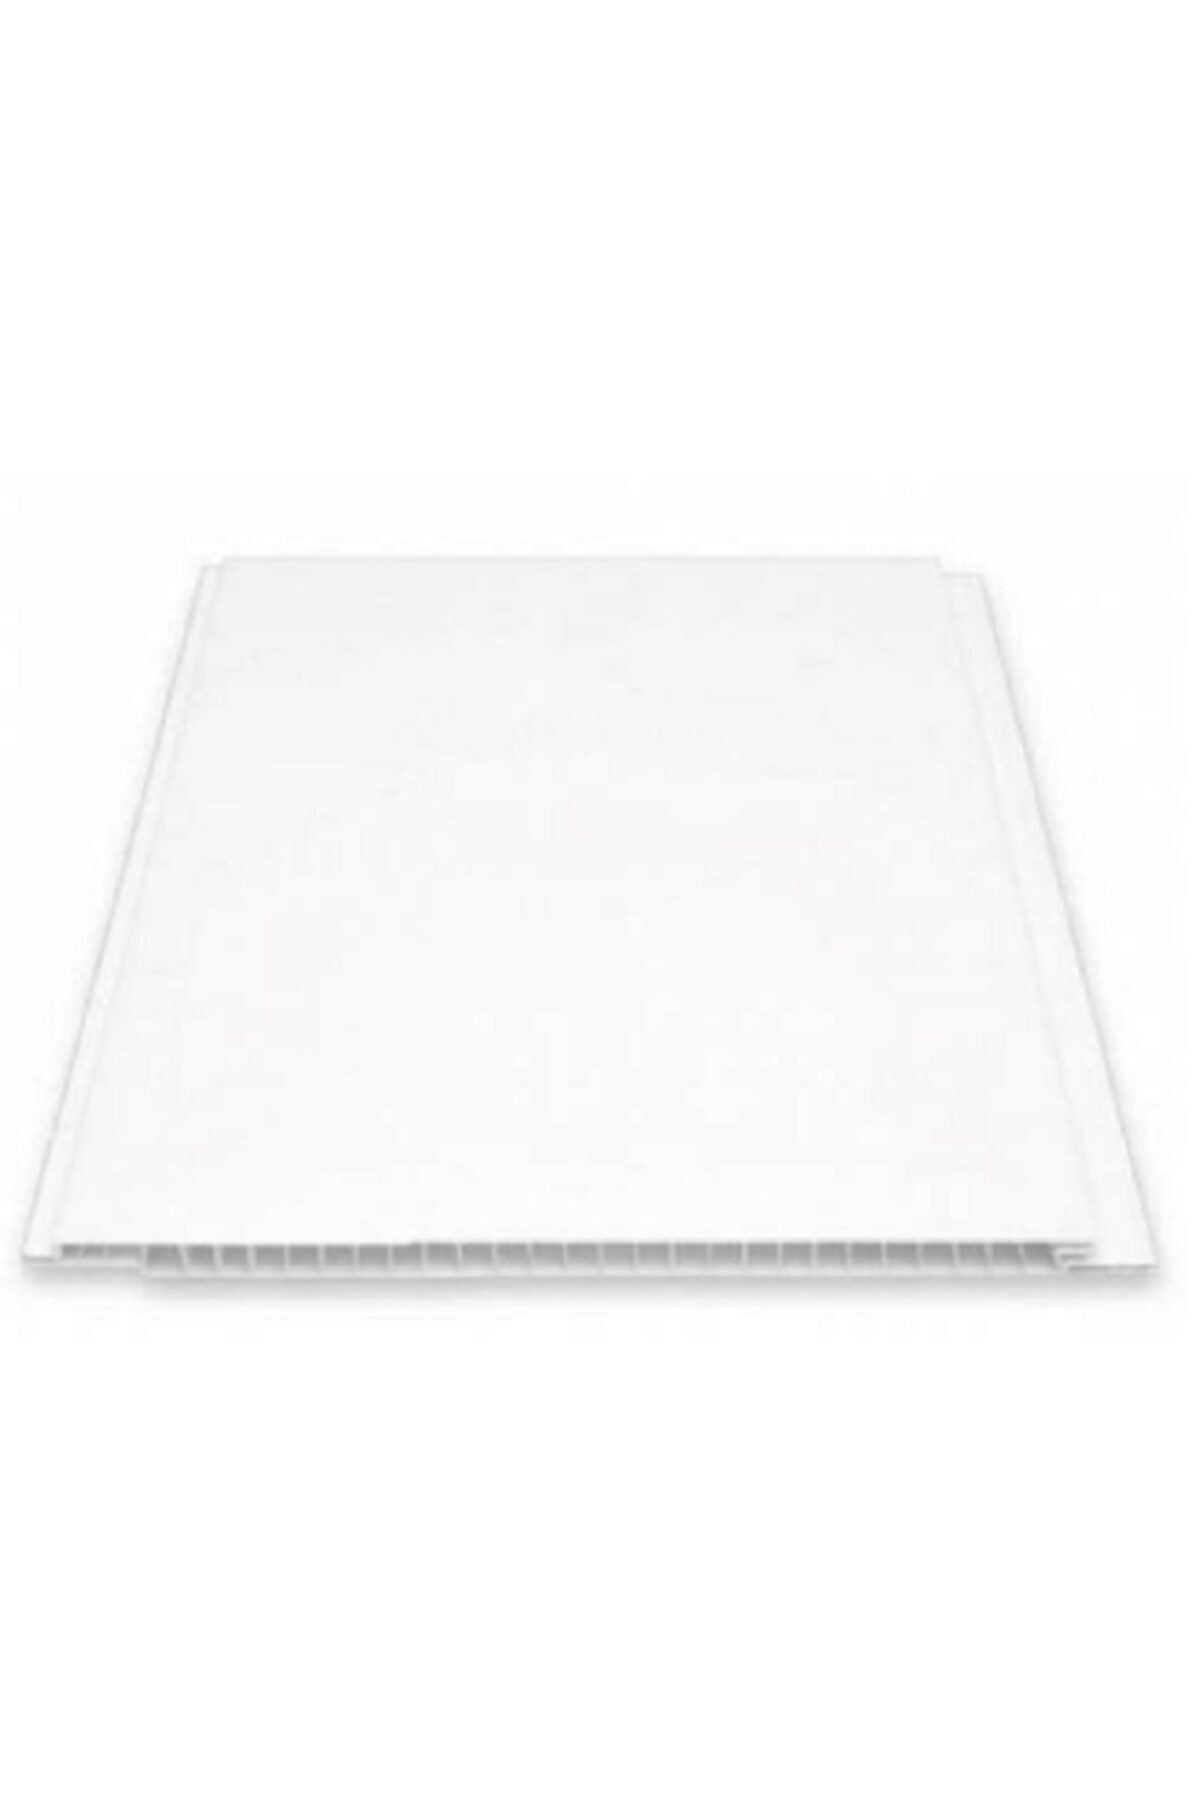 Lambiri Düz Beyaz Plastik Pvc Duvar - Tavan / 10 Adet 20 Cm X 3.5 Metre - 7 Metrekare